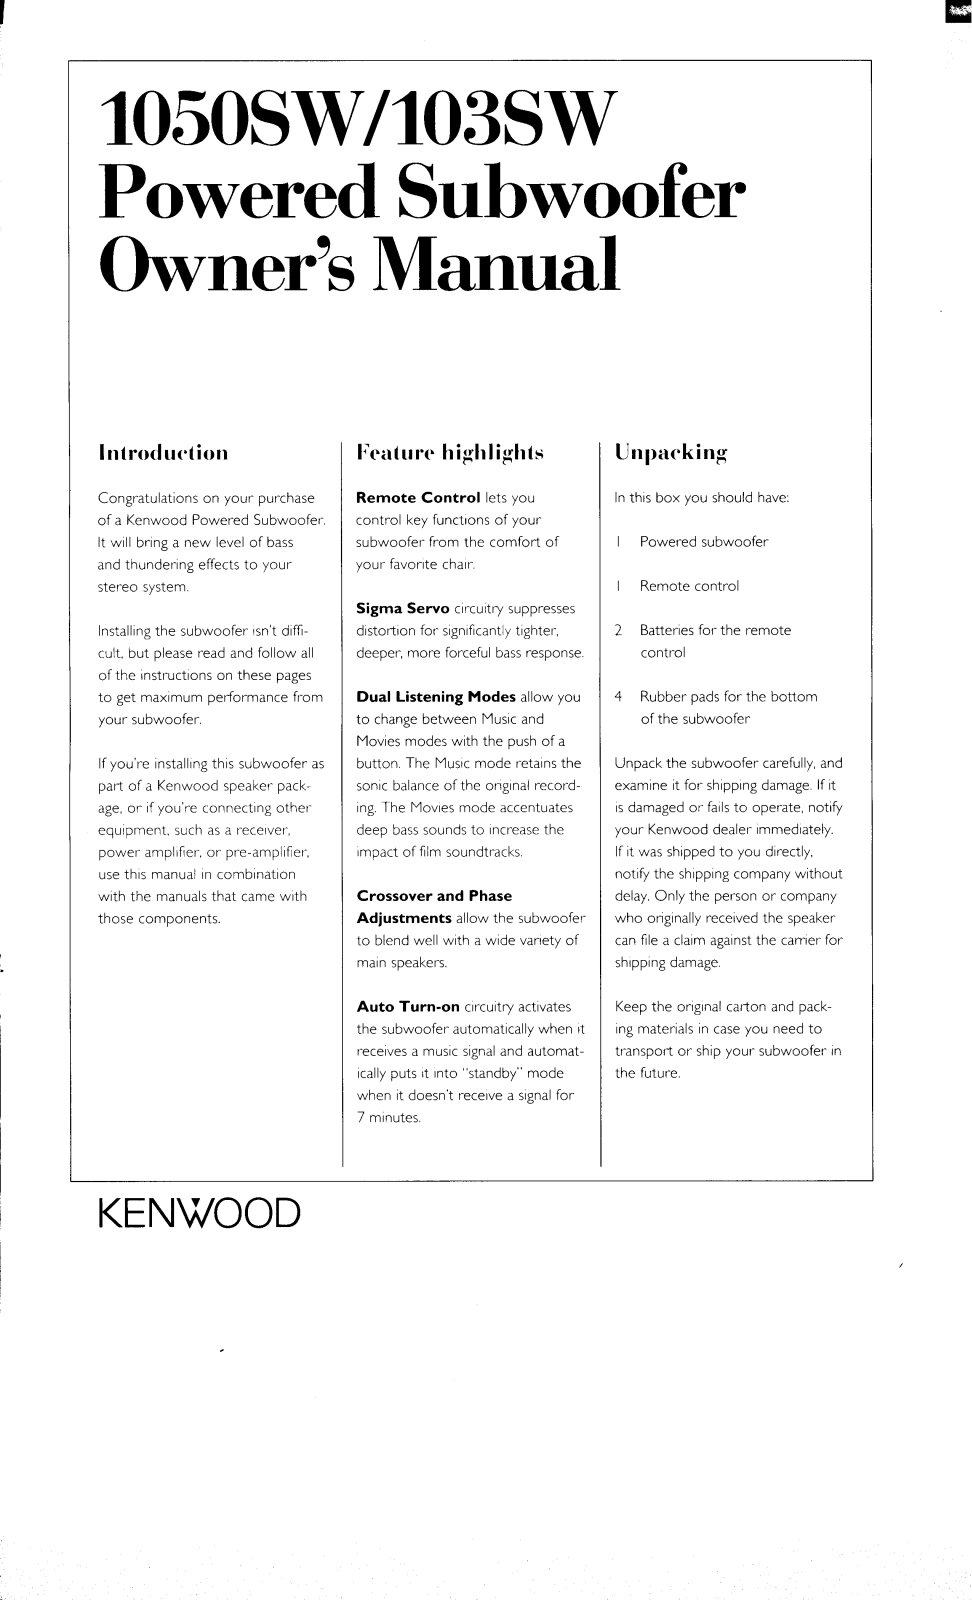 Kenwood 103SW, 1050SW Owner's Manual